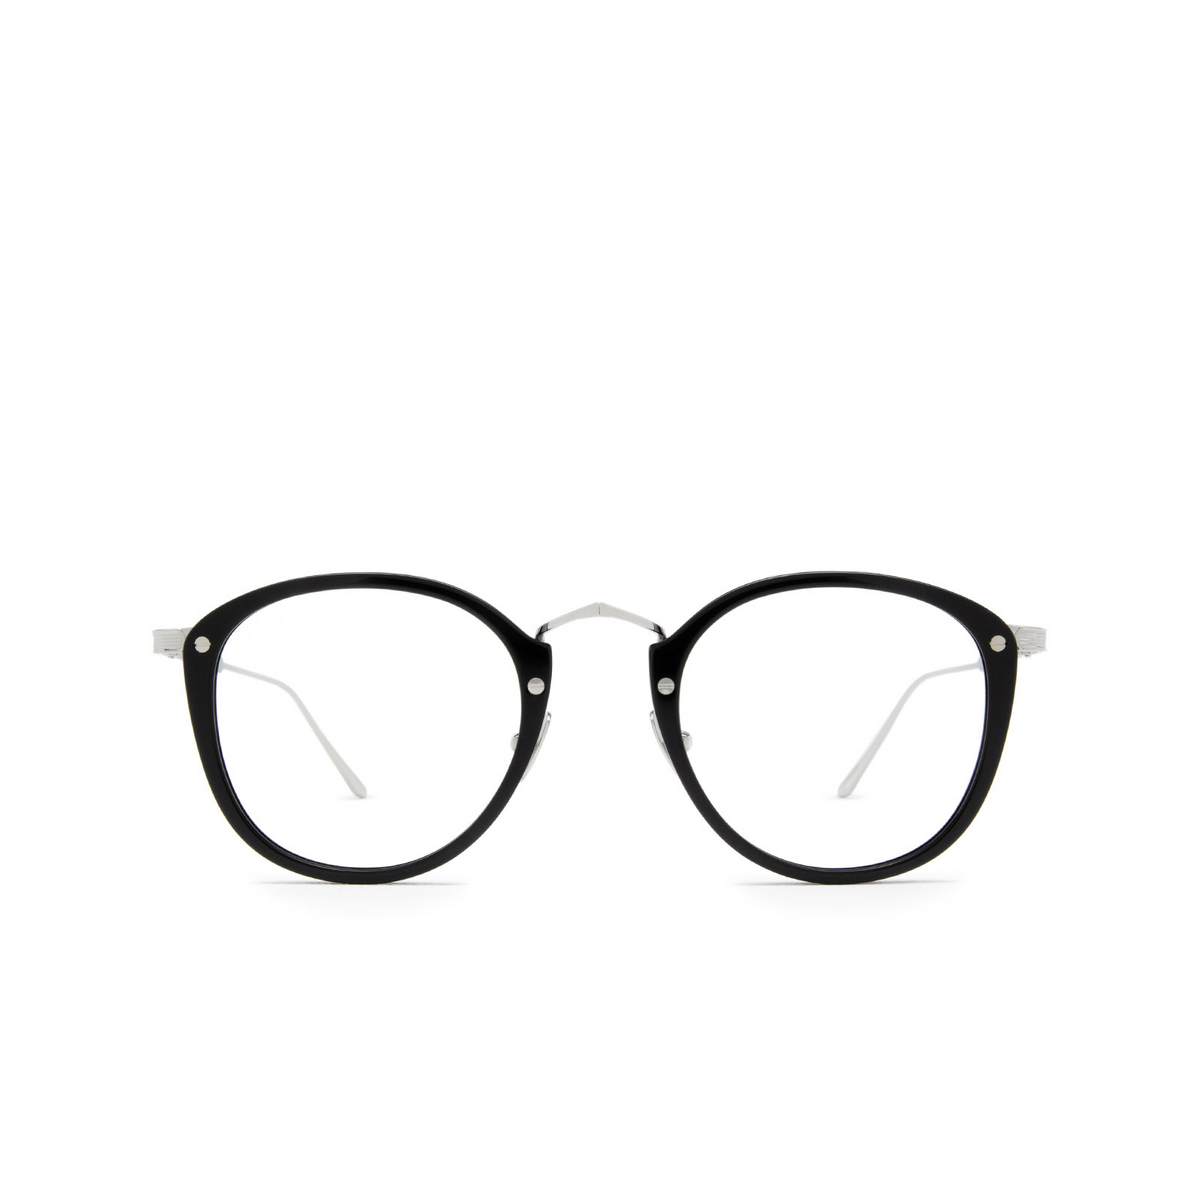 Cartier® Round Sunglasses: CT0014S color Black 007 - front view.